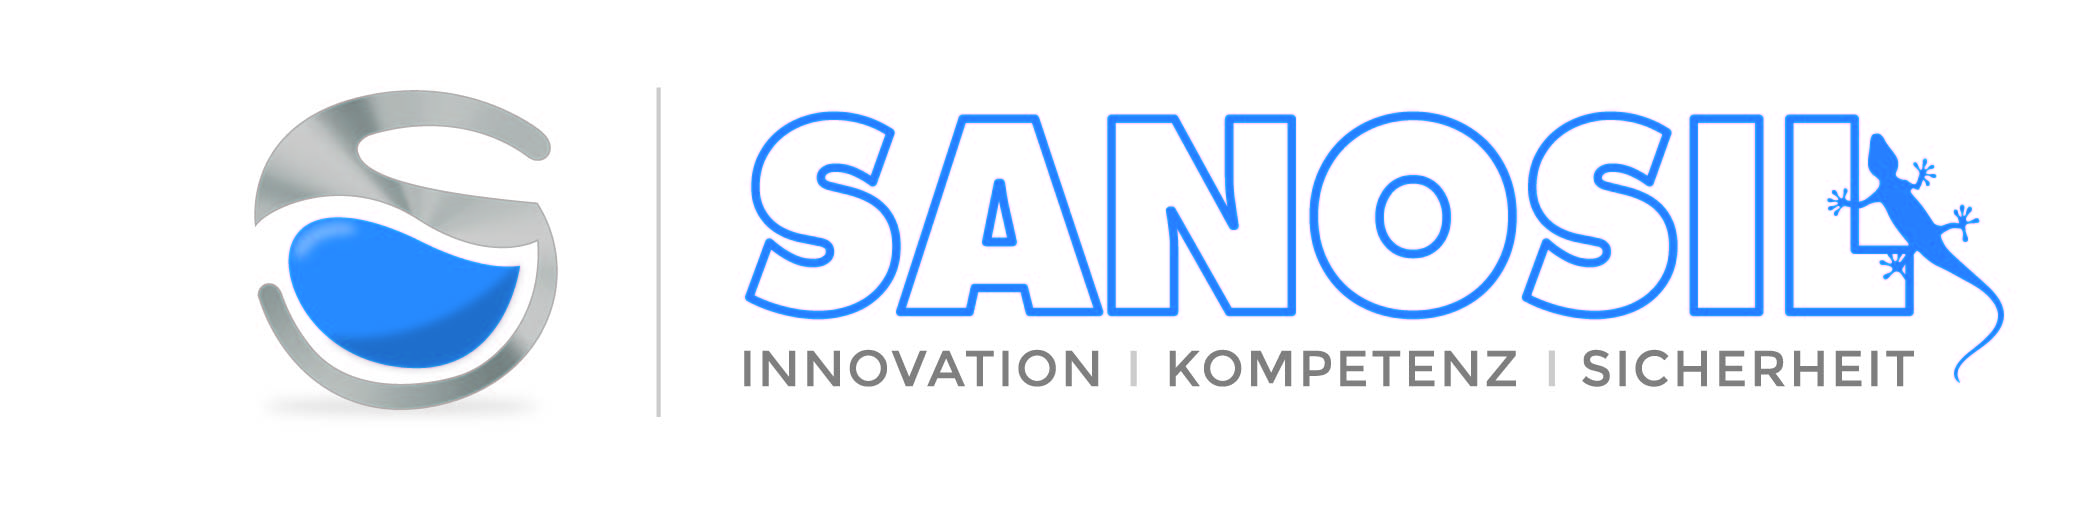 Sanosil Service GmbH